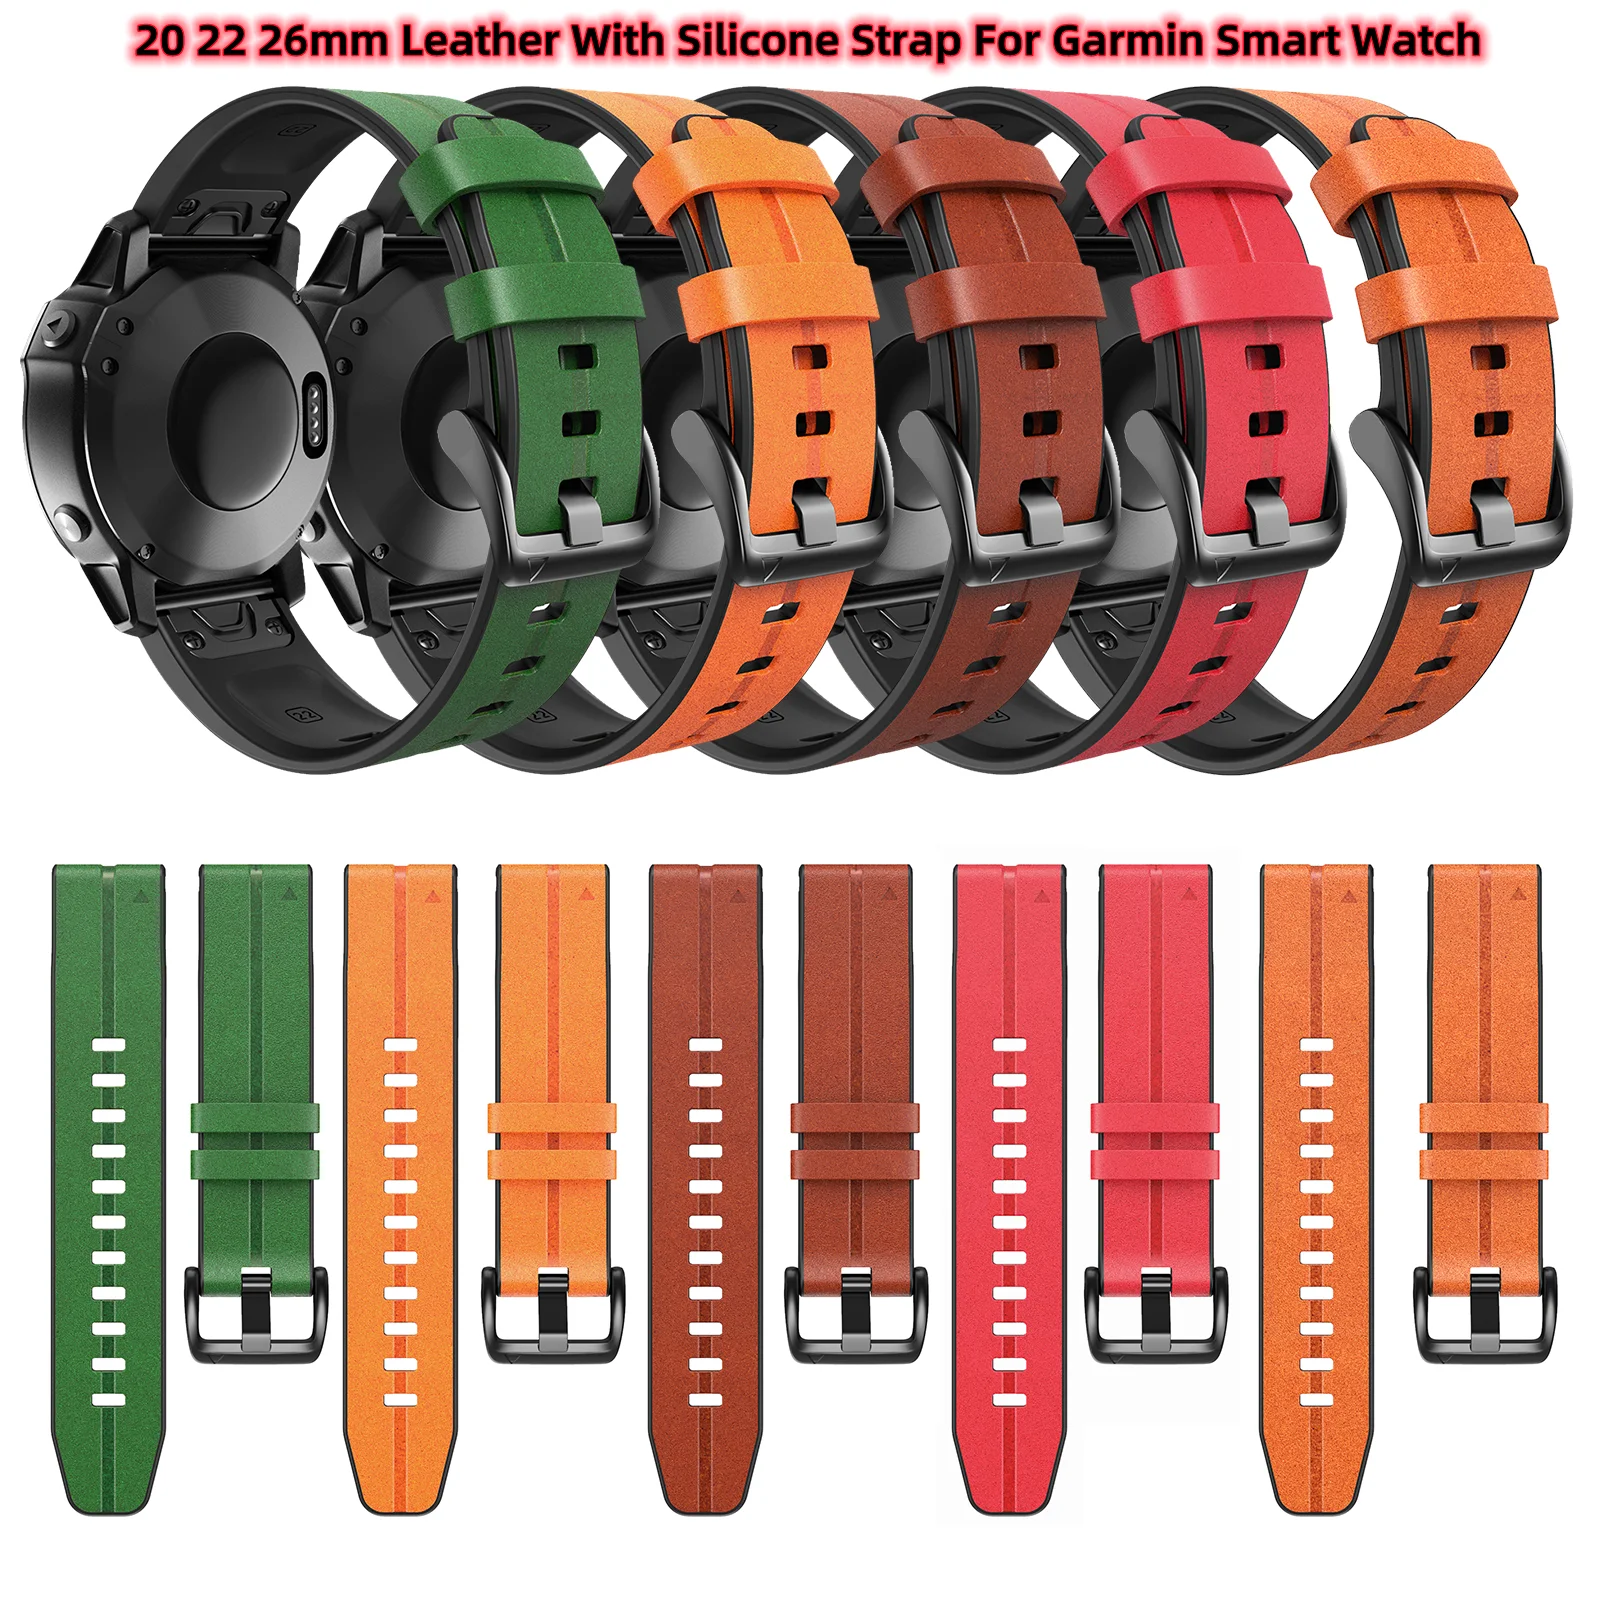 22 26mm Leather Strap For Garmin Fenix5 5X Plus 6 6X Pro 7 7X 3 3HR Instinct Quick Release Watch Band Silicone Bracelet